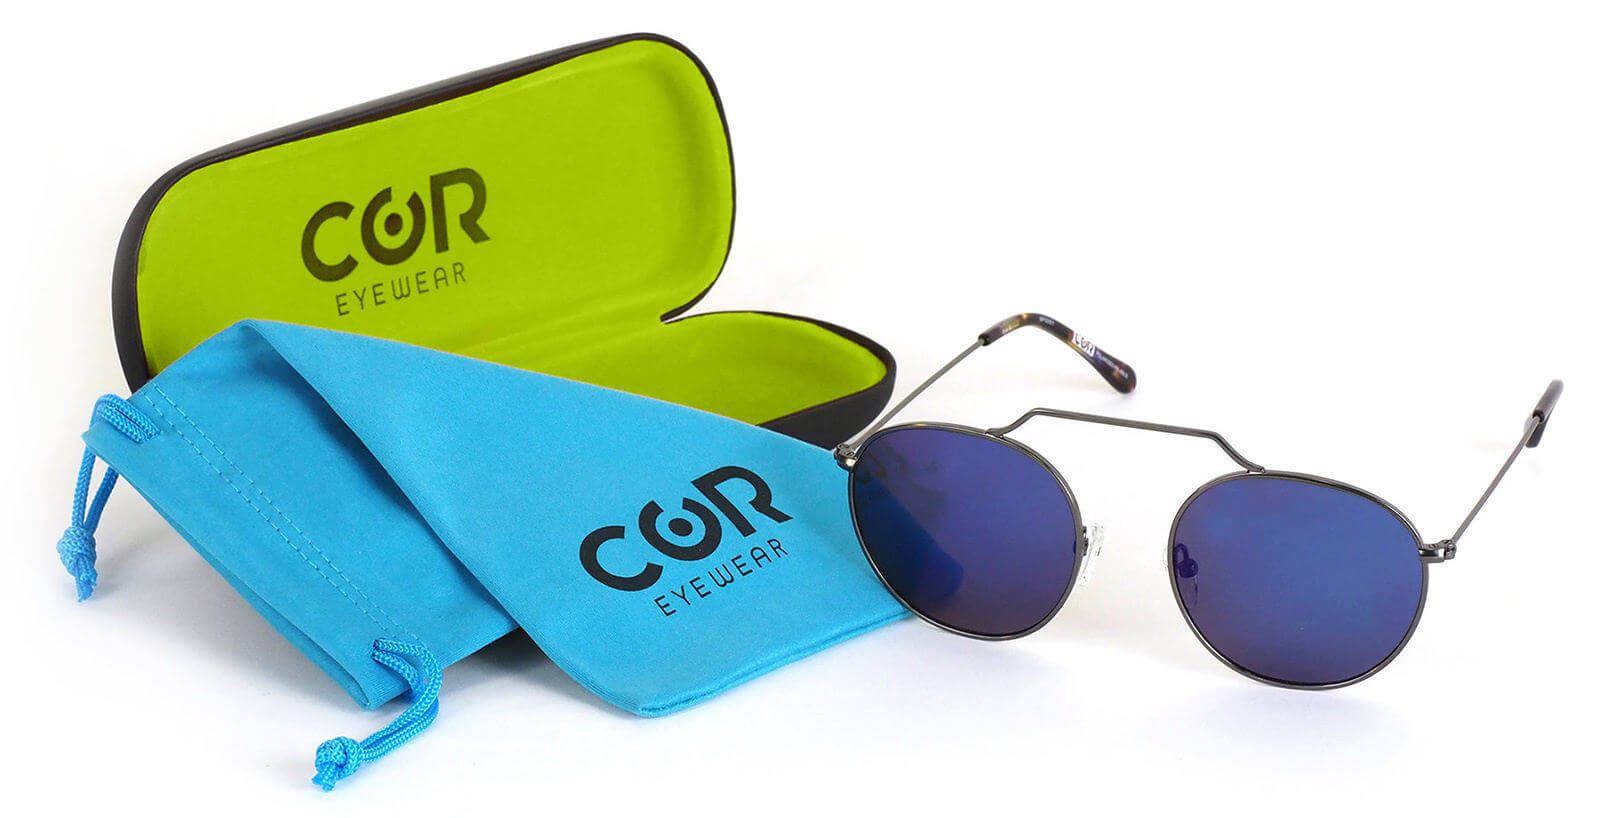 COR Brand Glasses Marketing Photos